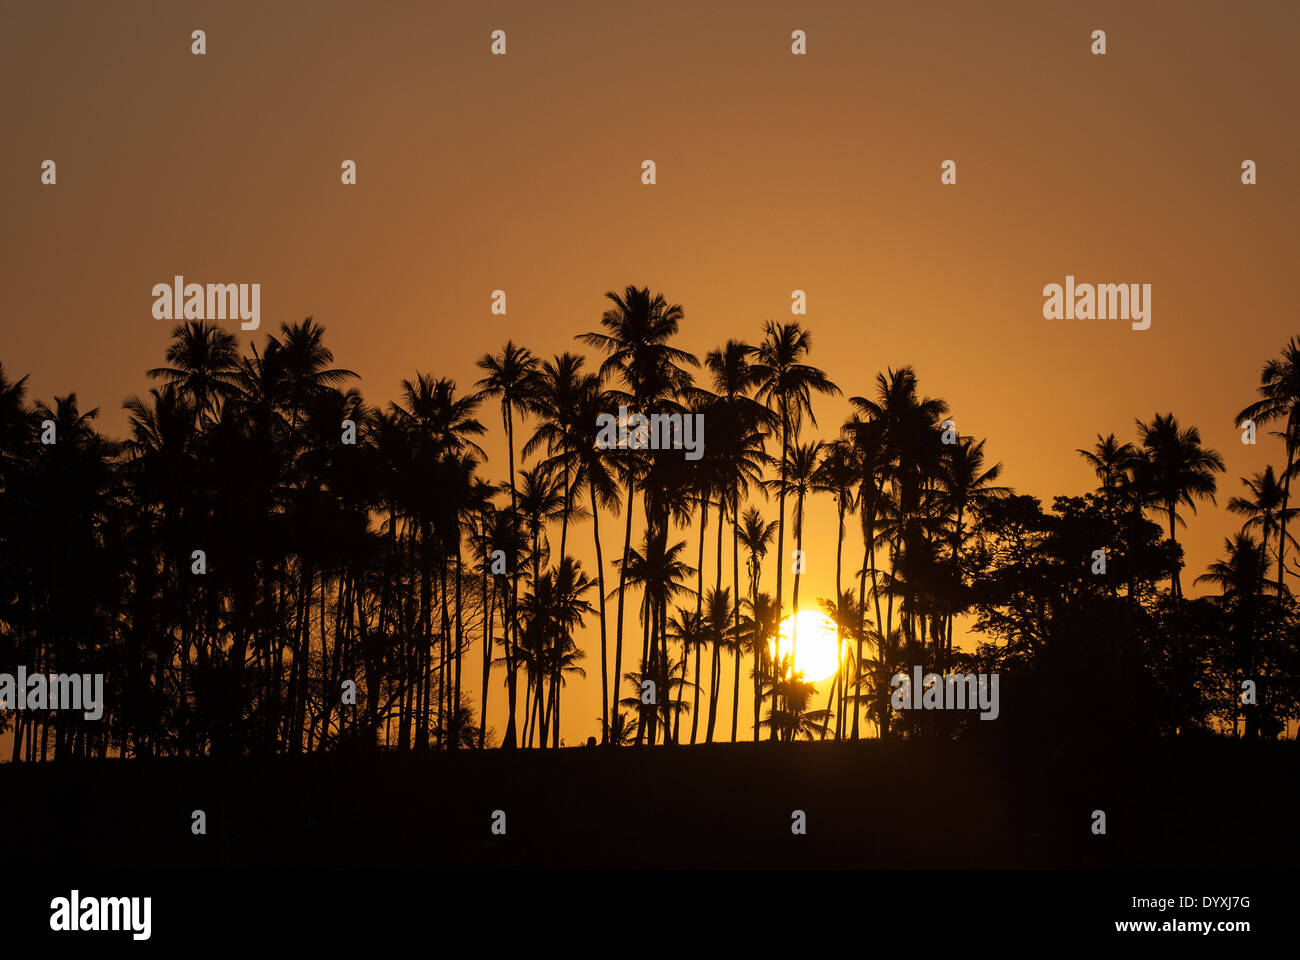 Northeast Brazil. Golden sun setting behind palm trees. Stock Photo